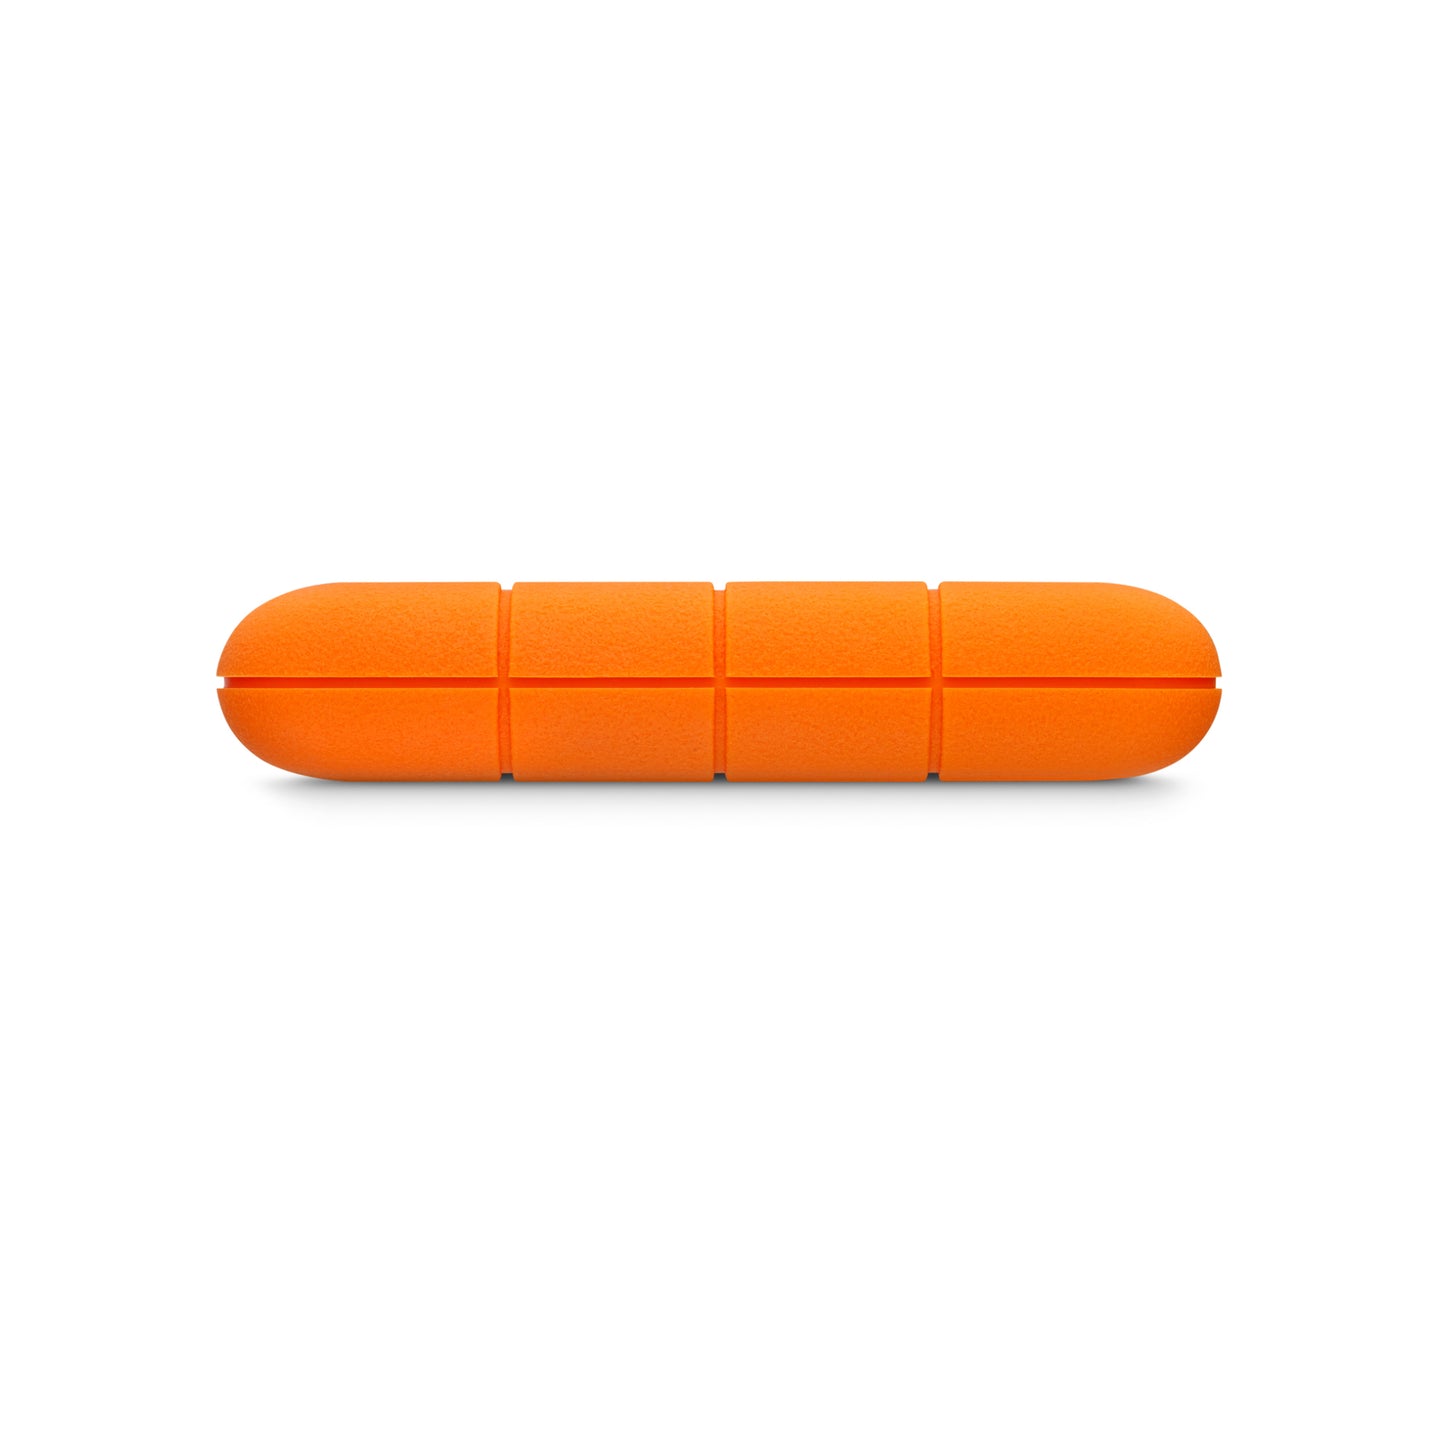 LACIE Rugged Mini USB 3.0 2TB - Orange